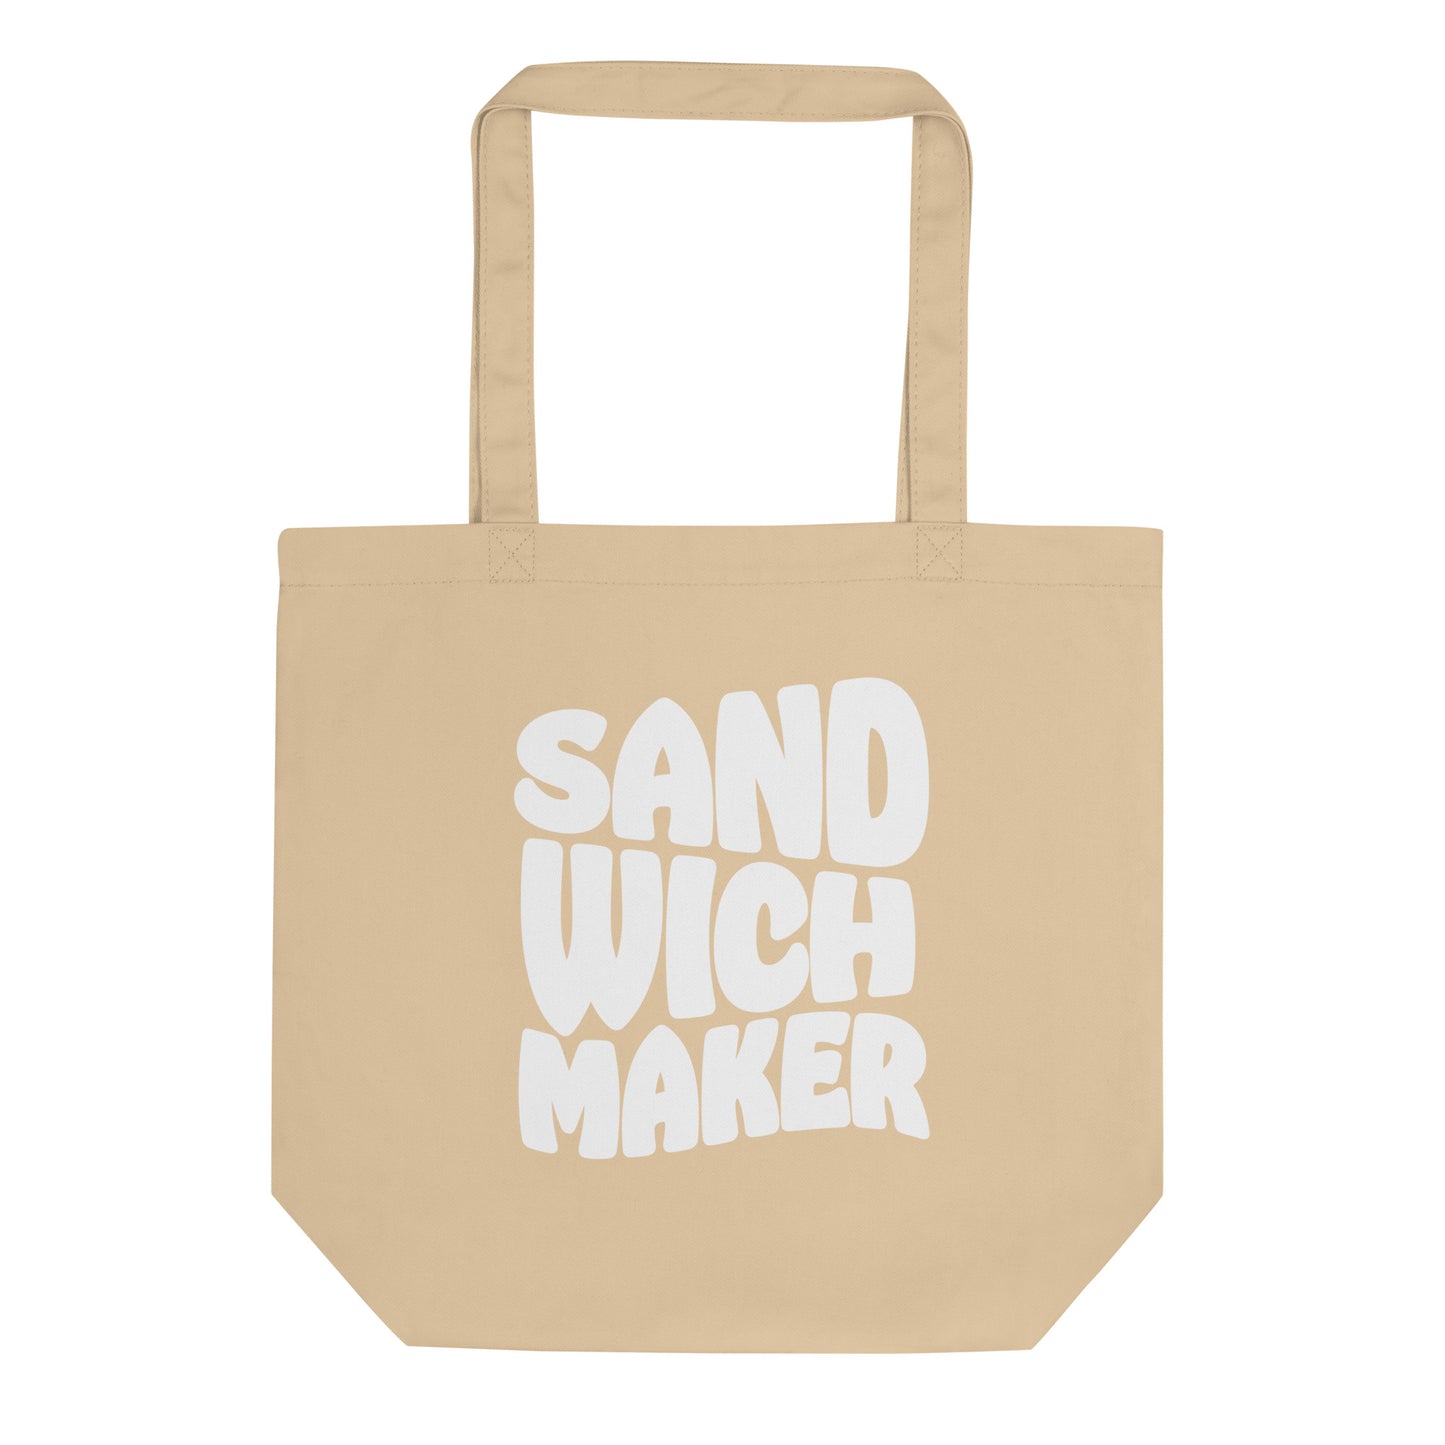 Sandwich Maker Tote Bag